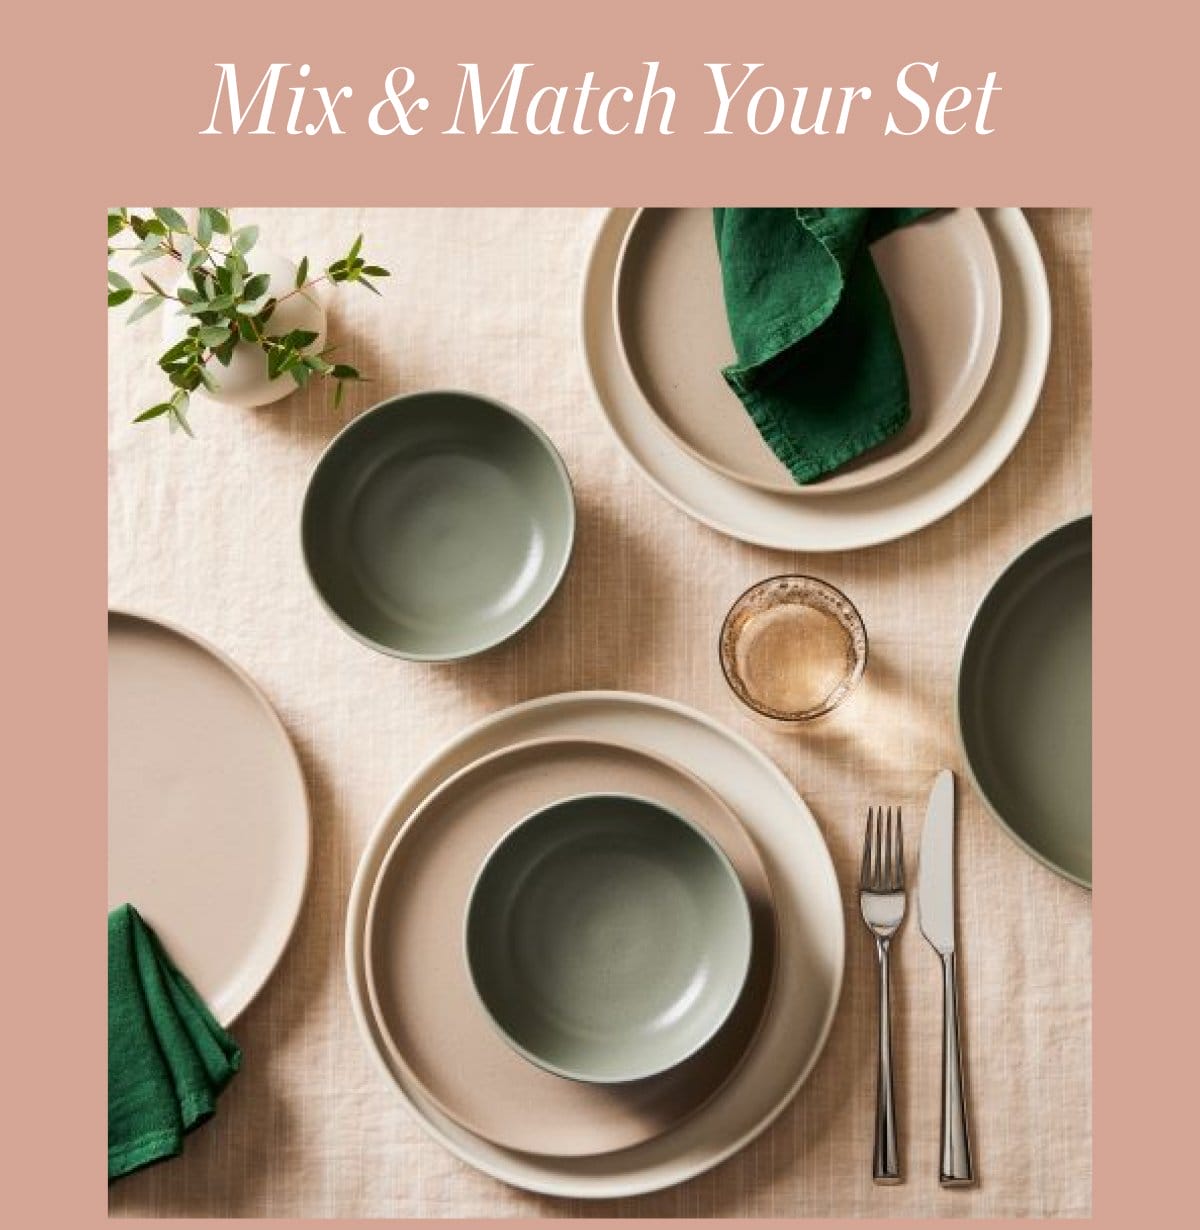 Mix & Match Your Set